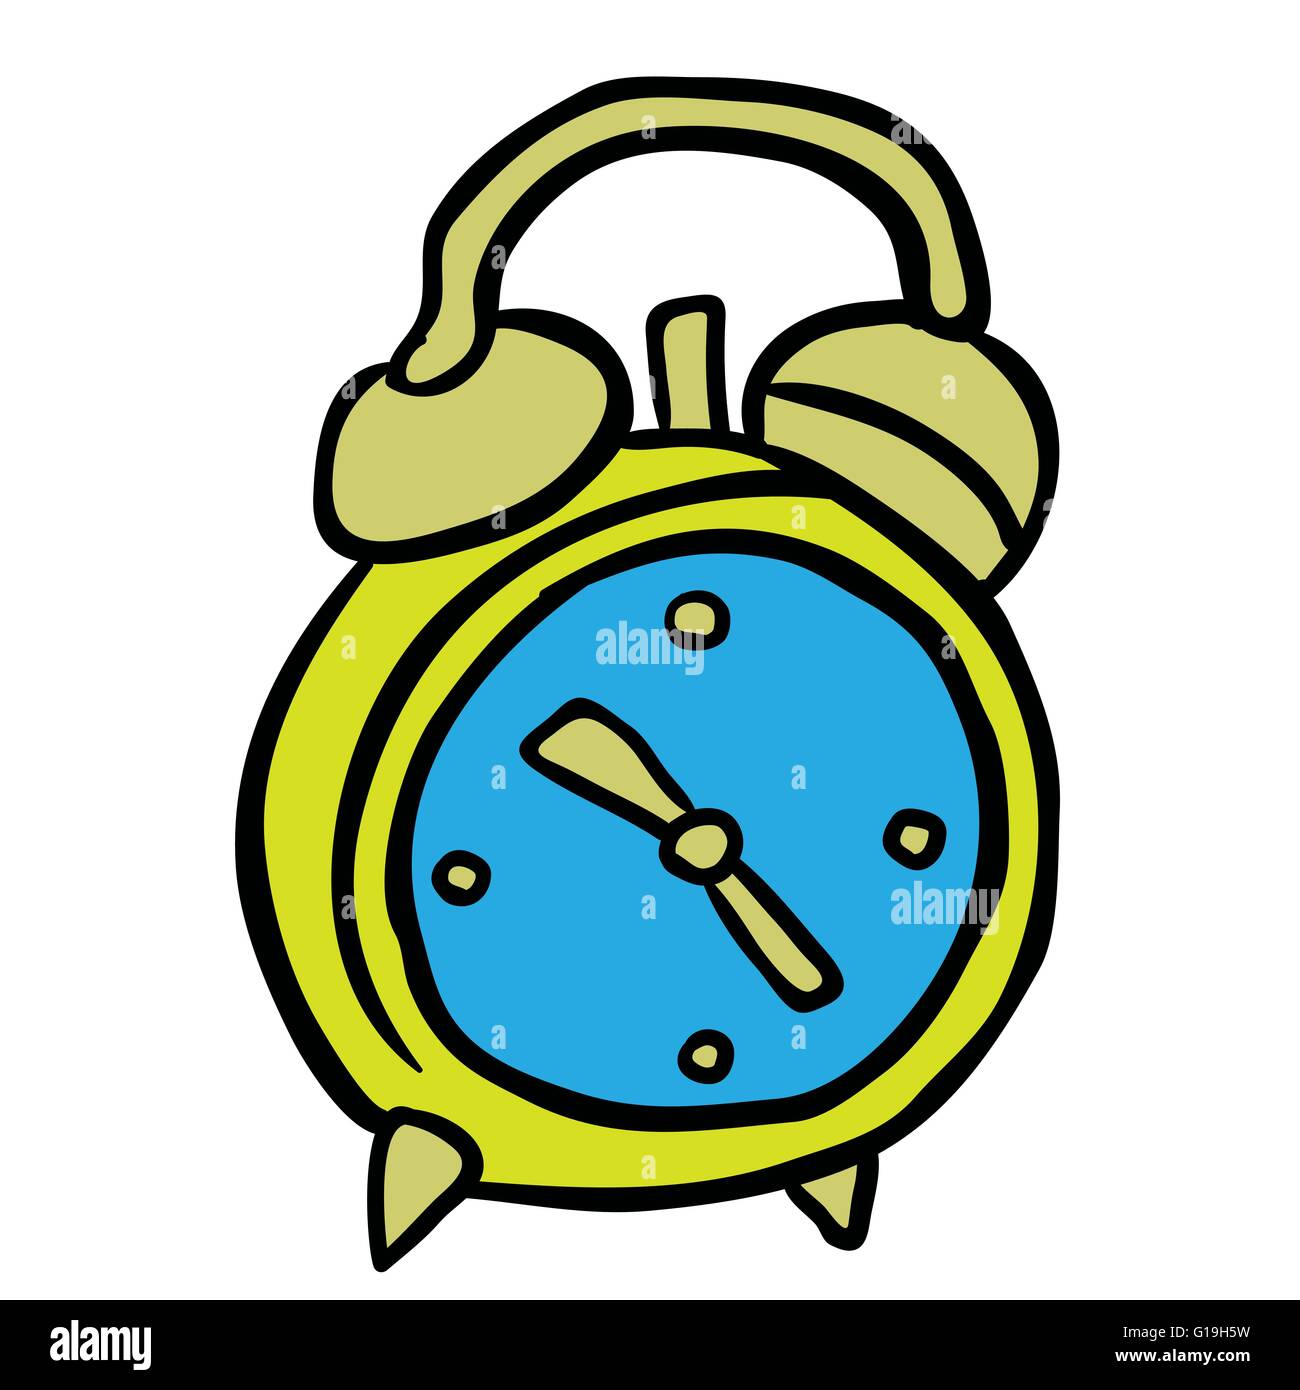 Alarm clock cartoon illustration hi-res stock photography and images - Alamy